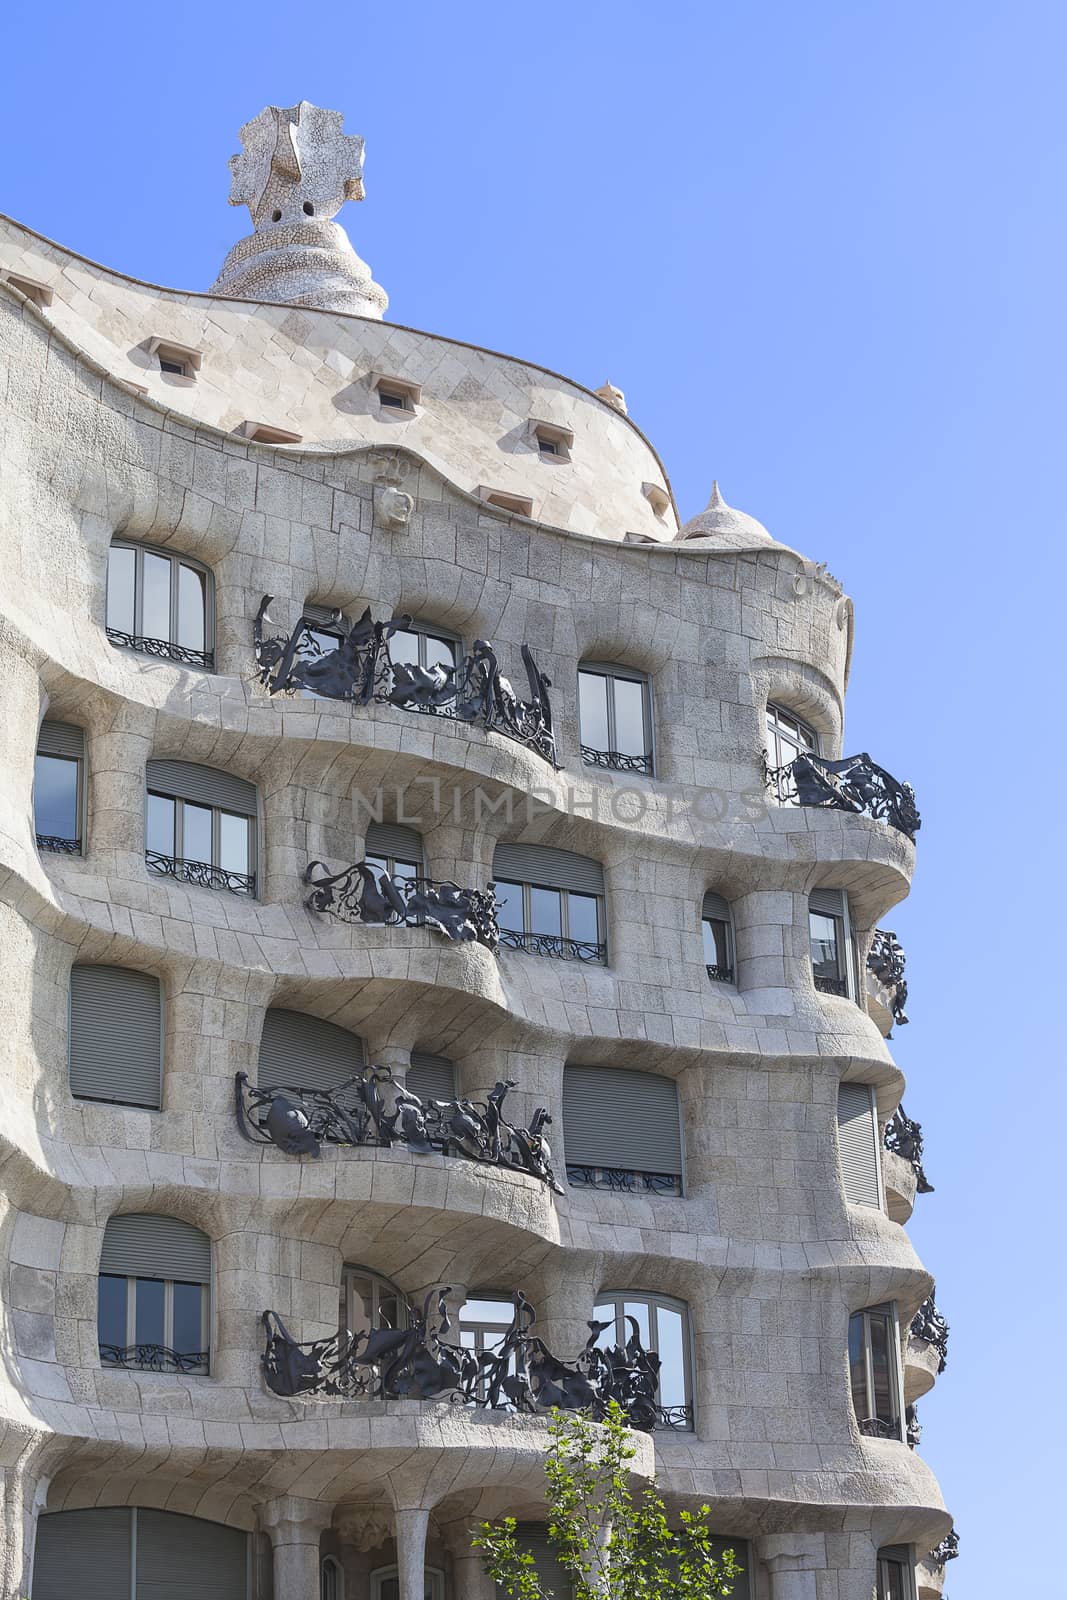  Casa Mila known as La Pedrera - facade with balconies of modernist building designed by Antoni Gaudí,  Barcelona, Spain